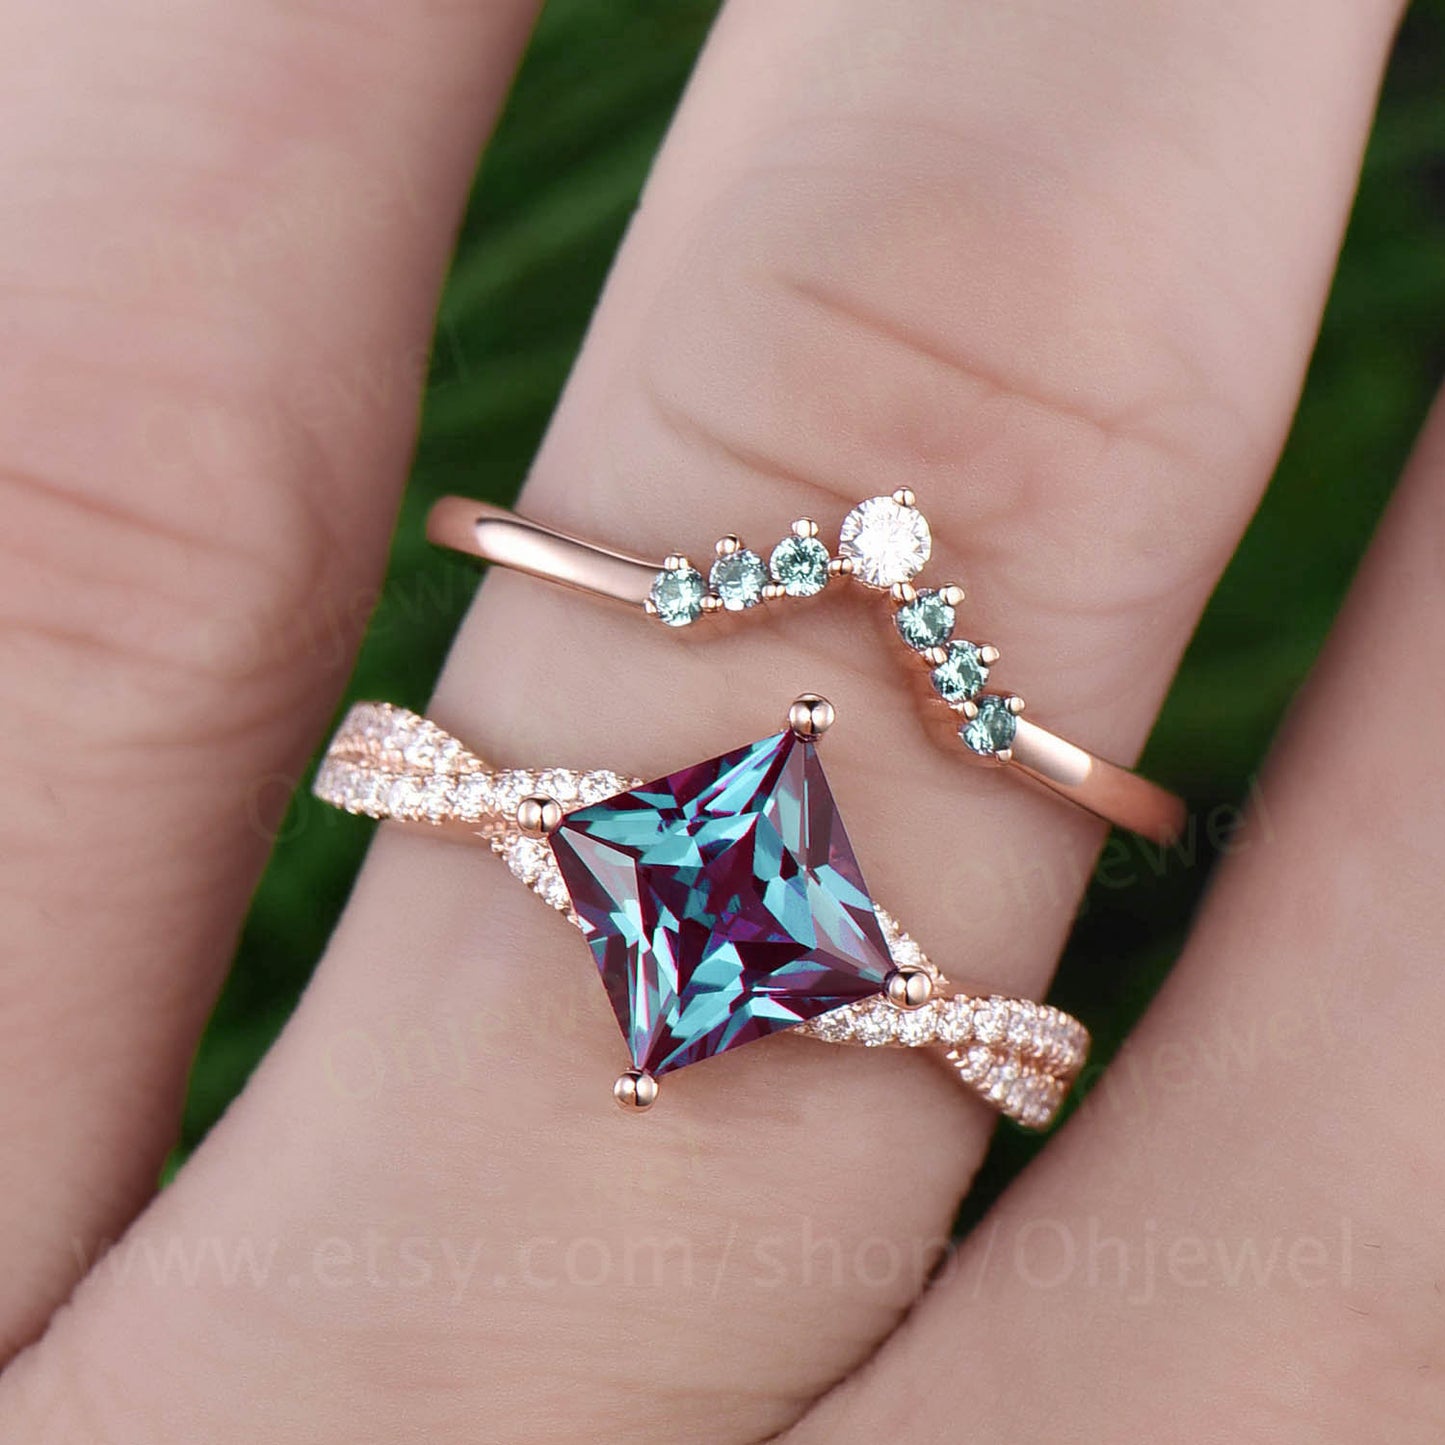 Princess cut Alexandrite rose gold ring 2pcs color change Alexandrite engagement ring set vintage moissanite ring set custom jewelry gift